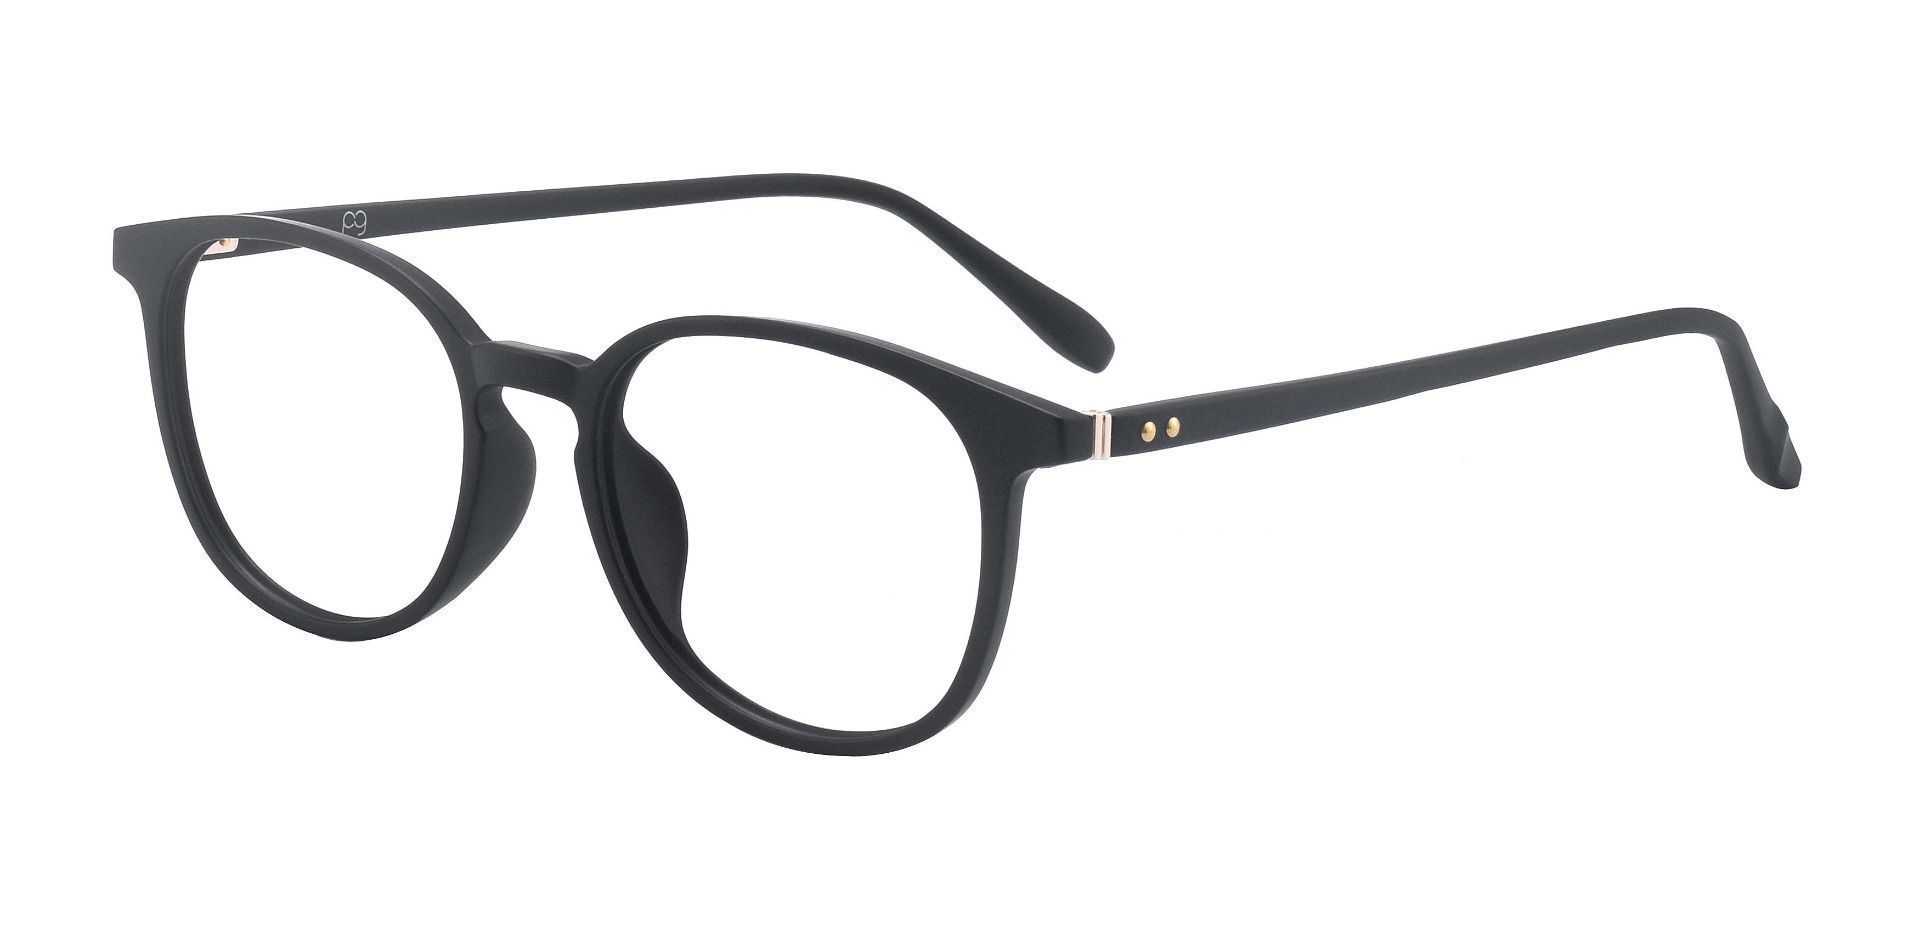 Lexington Oval Eyeglasses Frame - Black